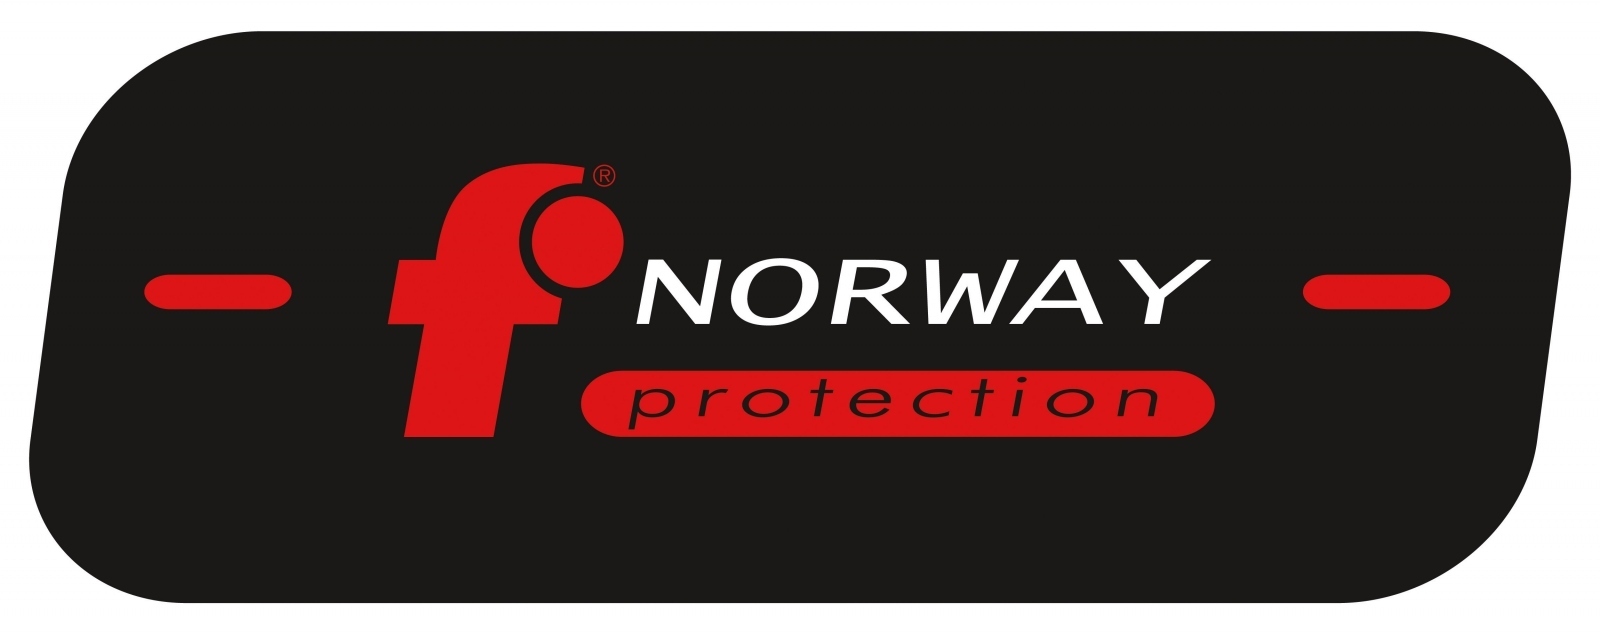 pics/Feldtmann/Norway/norwayprotection-logo.jpg